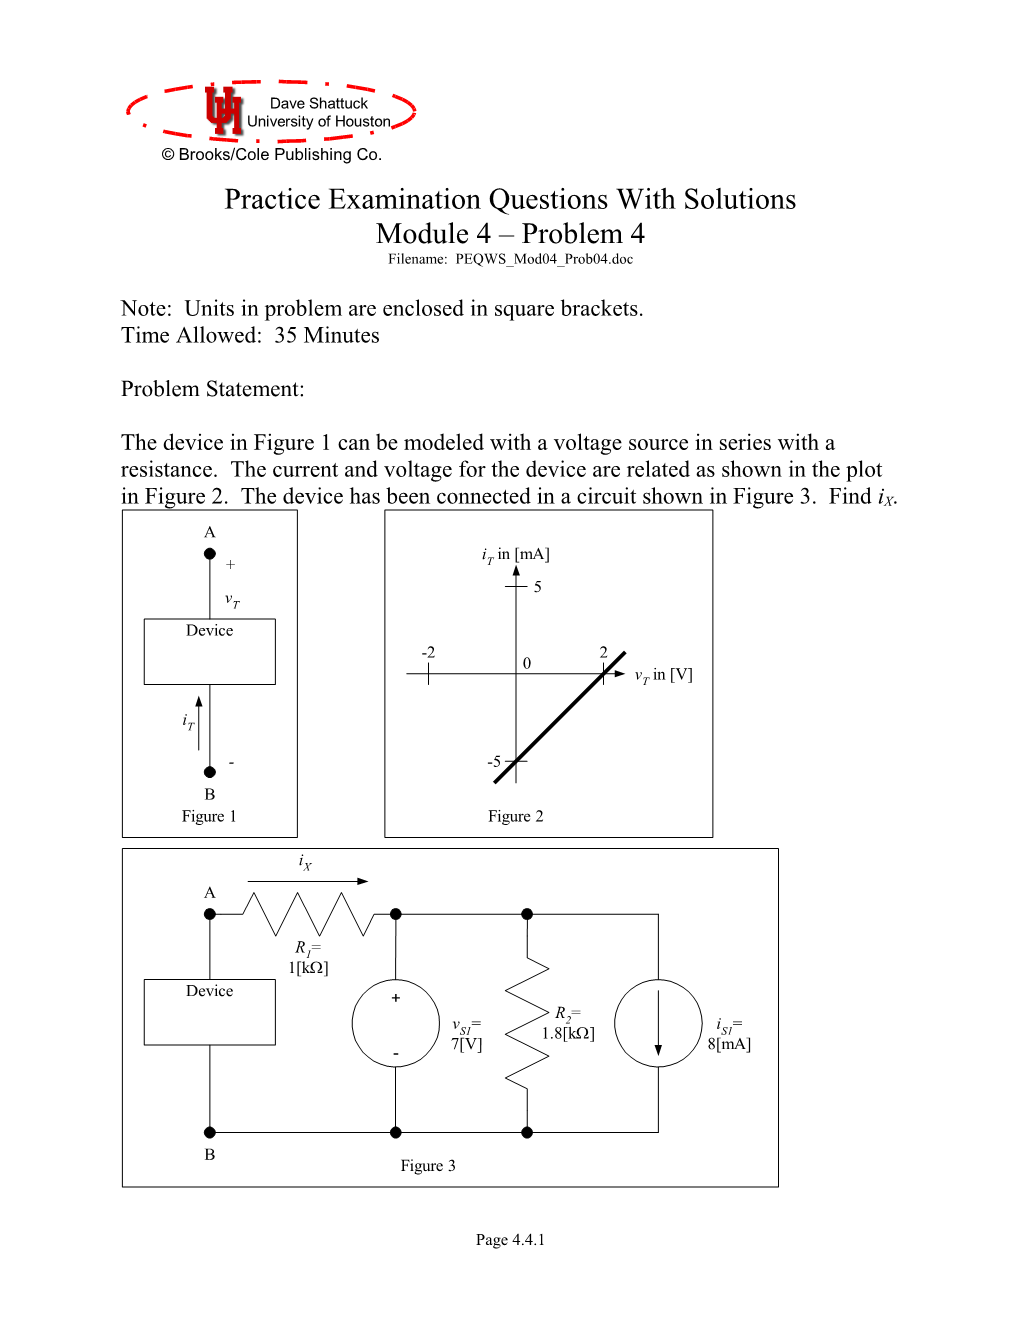 Practice Examination Module 4 Problem 4